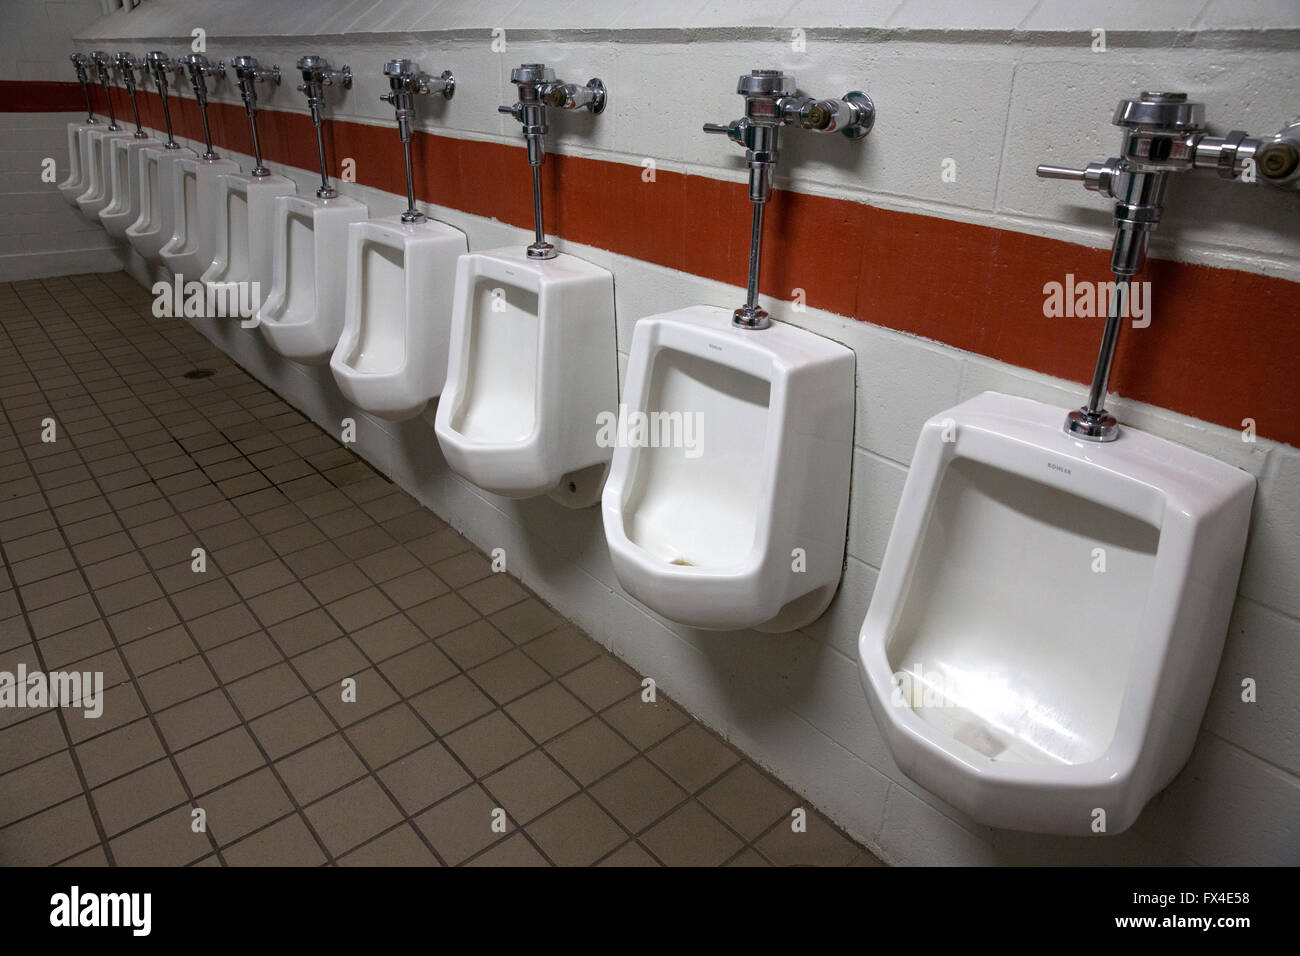 Public restroom urinals Stock Photo